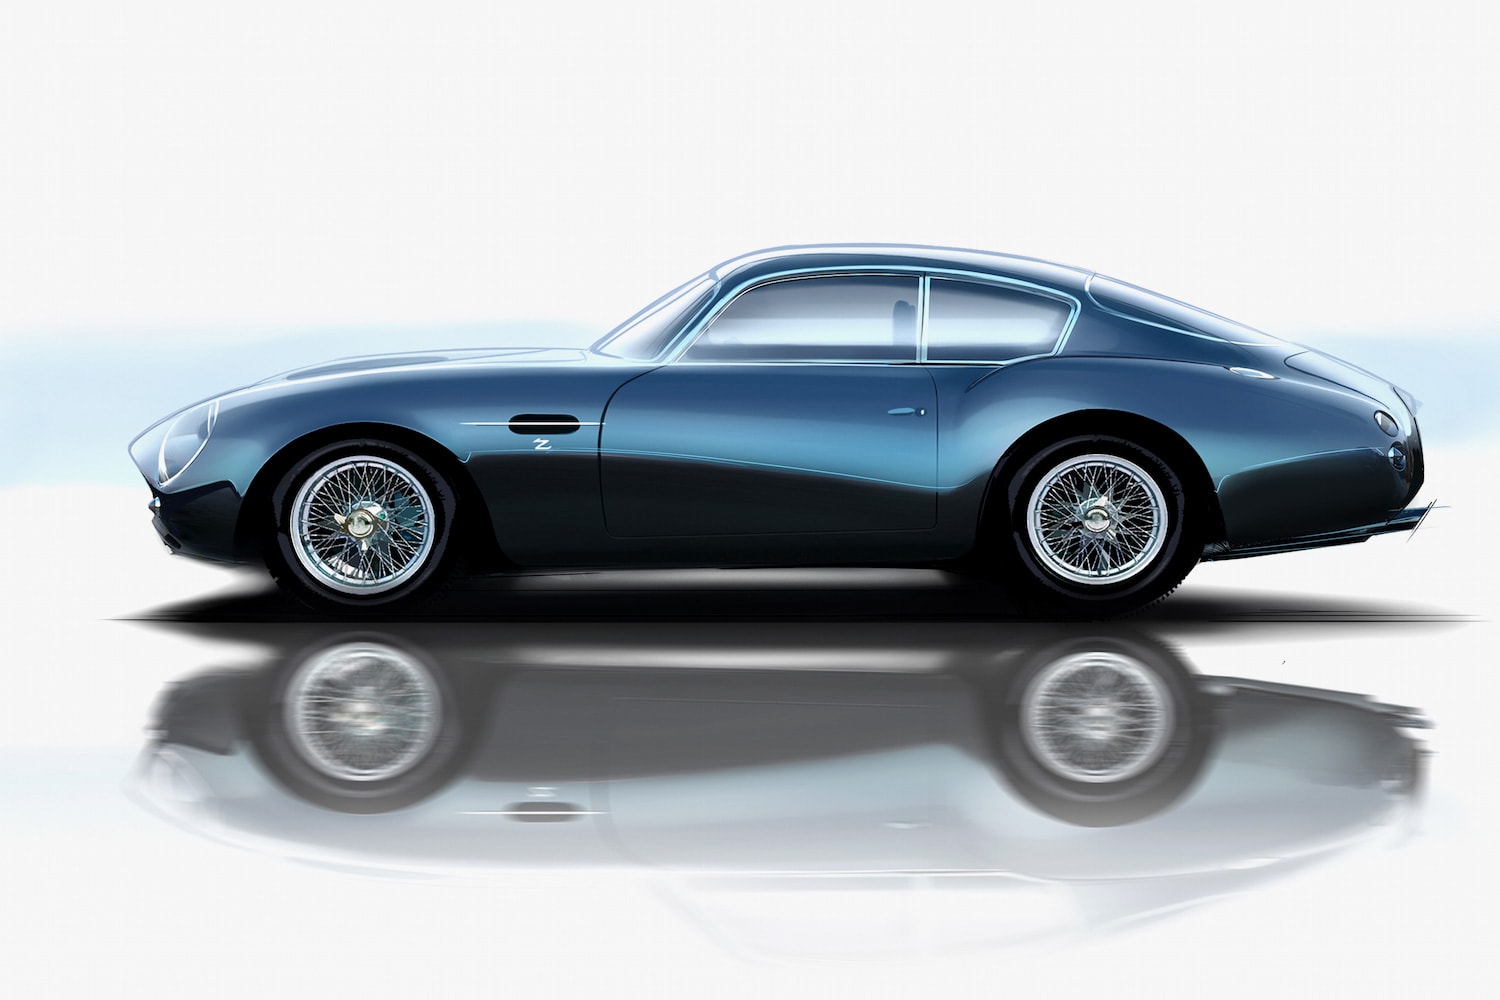 Aston Martin Unveils $8M DBS GT Zagato Hypercar renders DBZ Centenary Collection DB4 GT Zagato